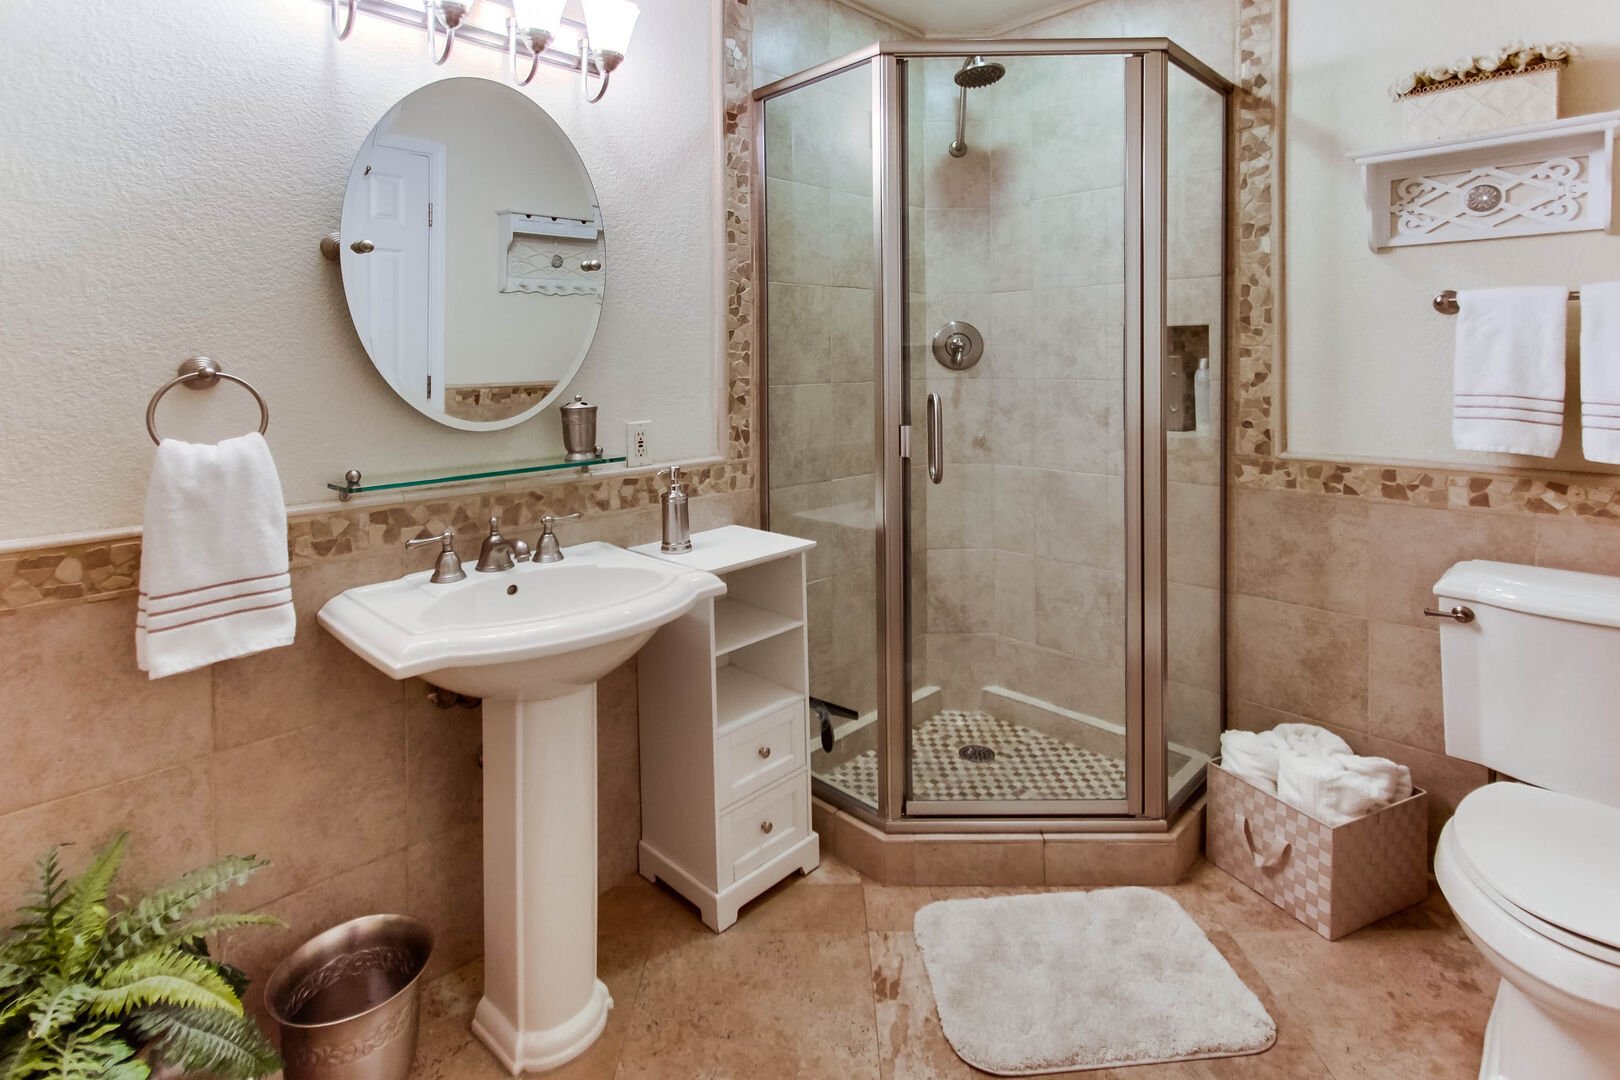 Master bathroom with rain shower head, toilet and vanity